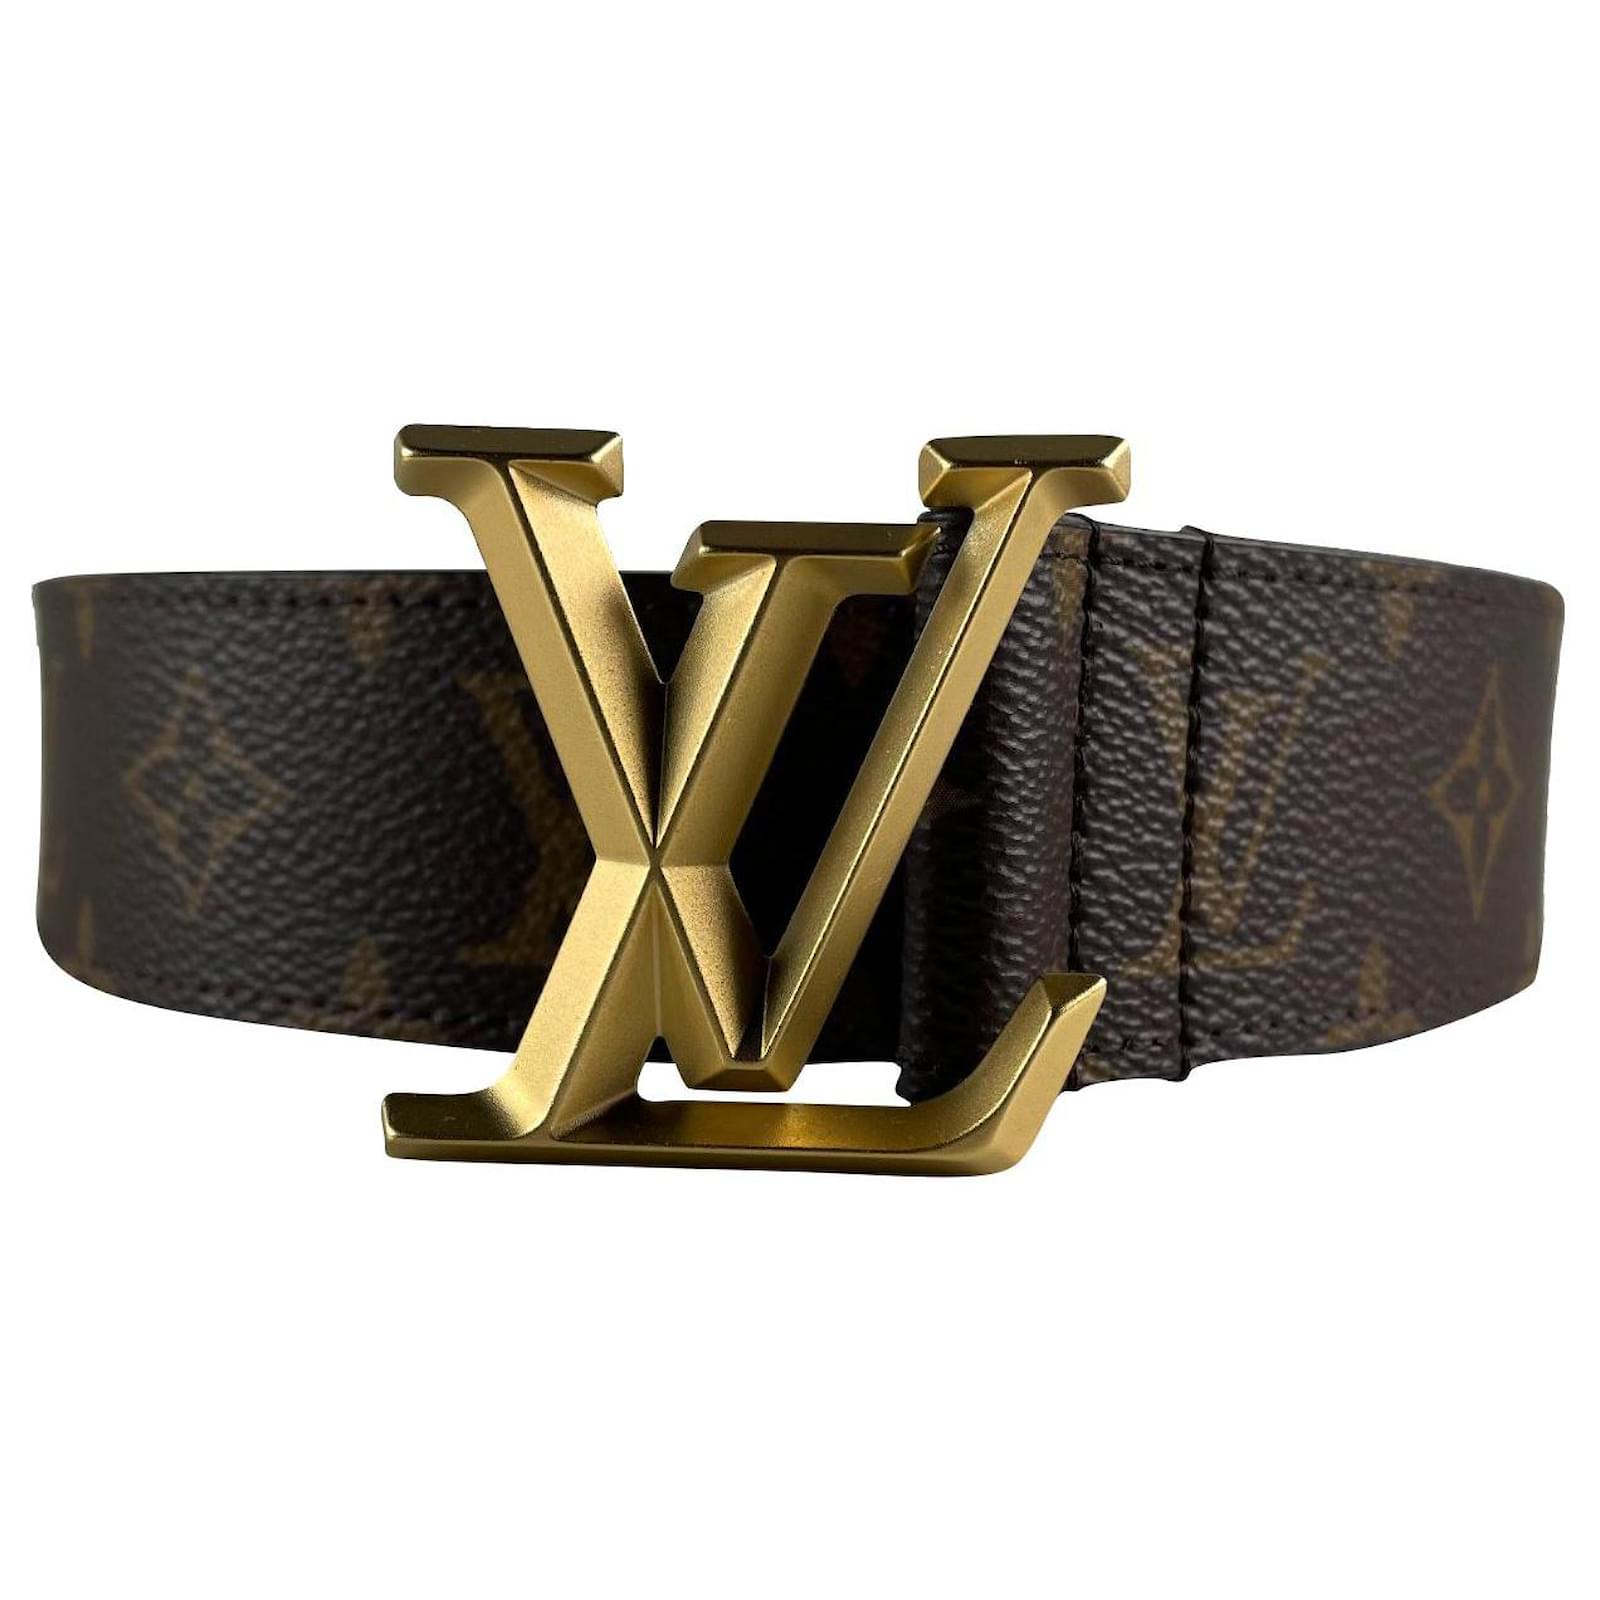 LOUIS VUITTON Black Leather Buckle Belt with Gold LV Logo Size 85 CM Length